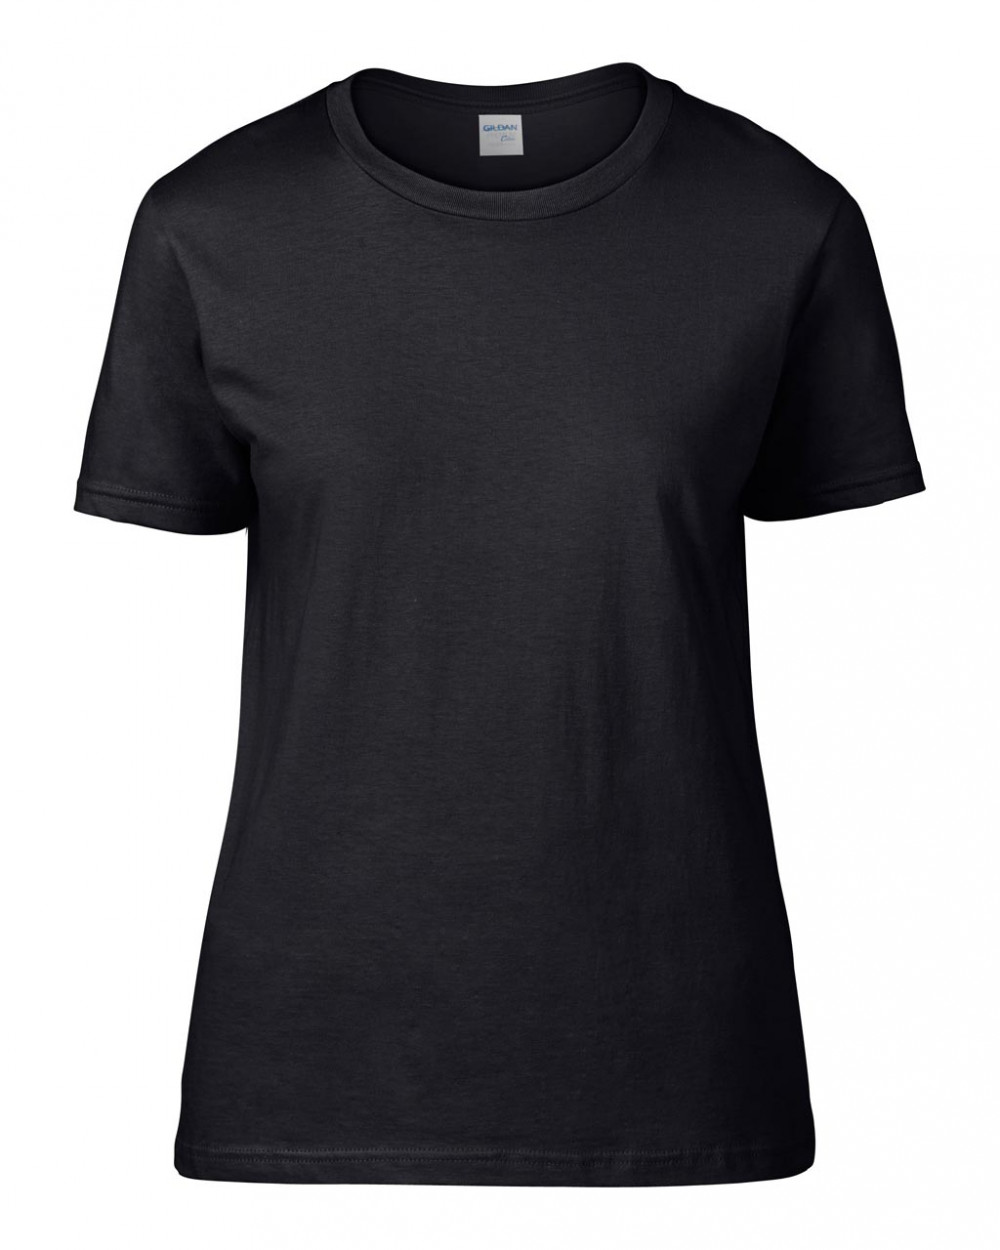  Gildan női prémium pamut póló - fekete